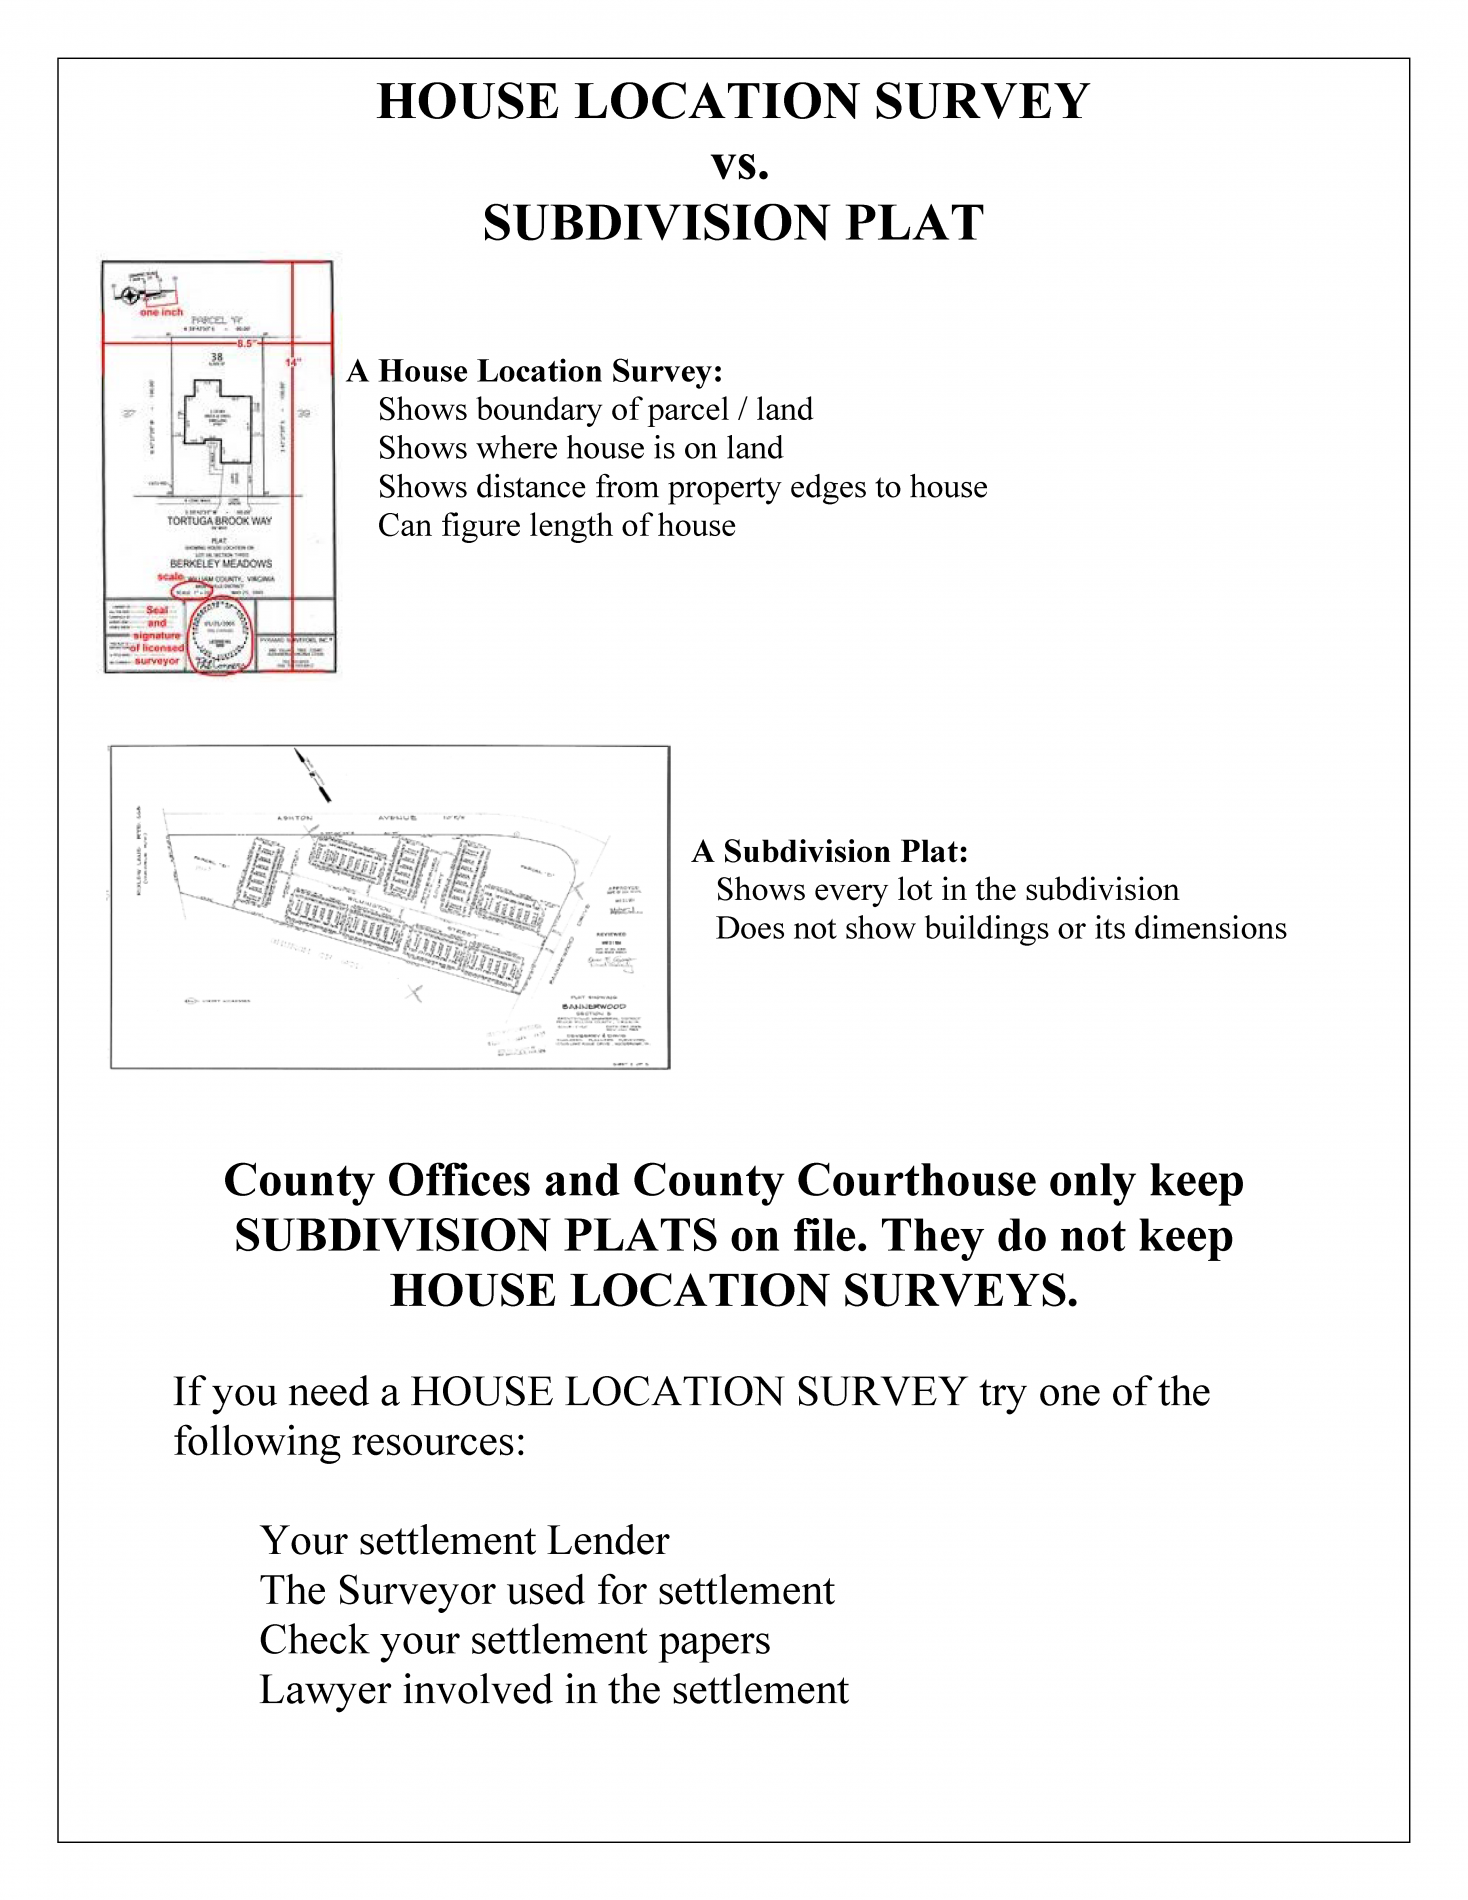 House Location Survey Information Sheet